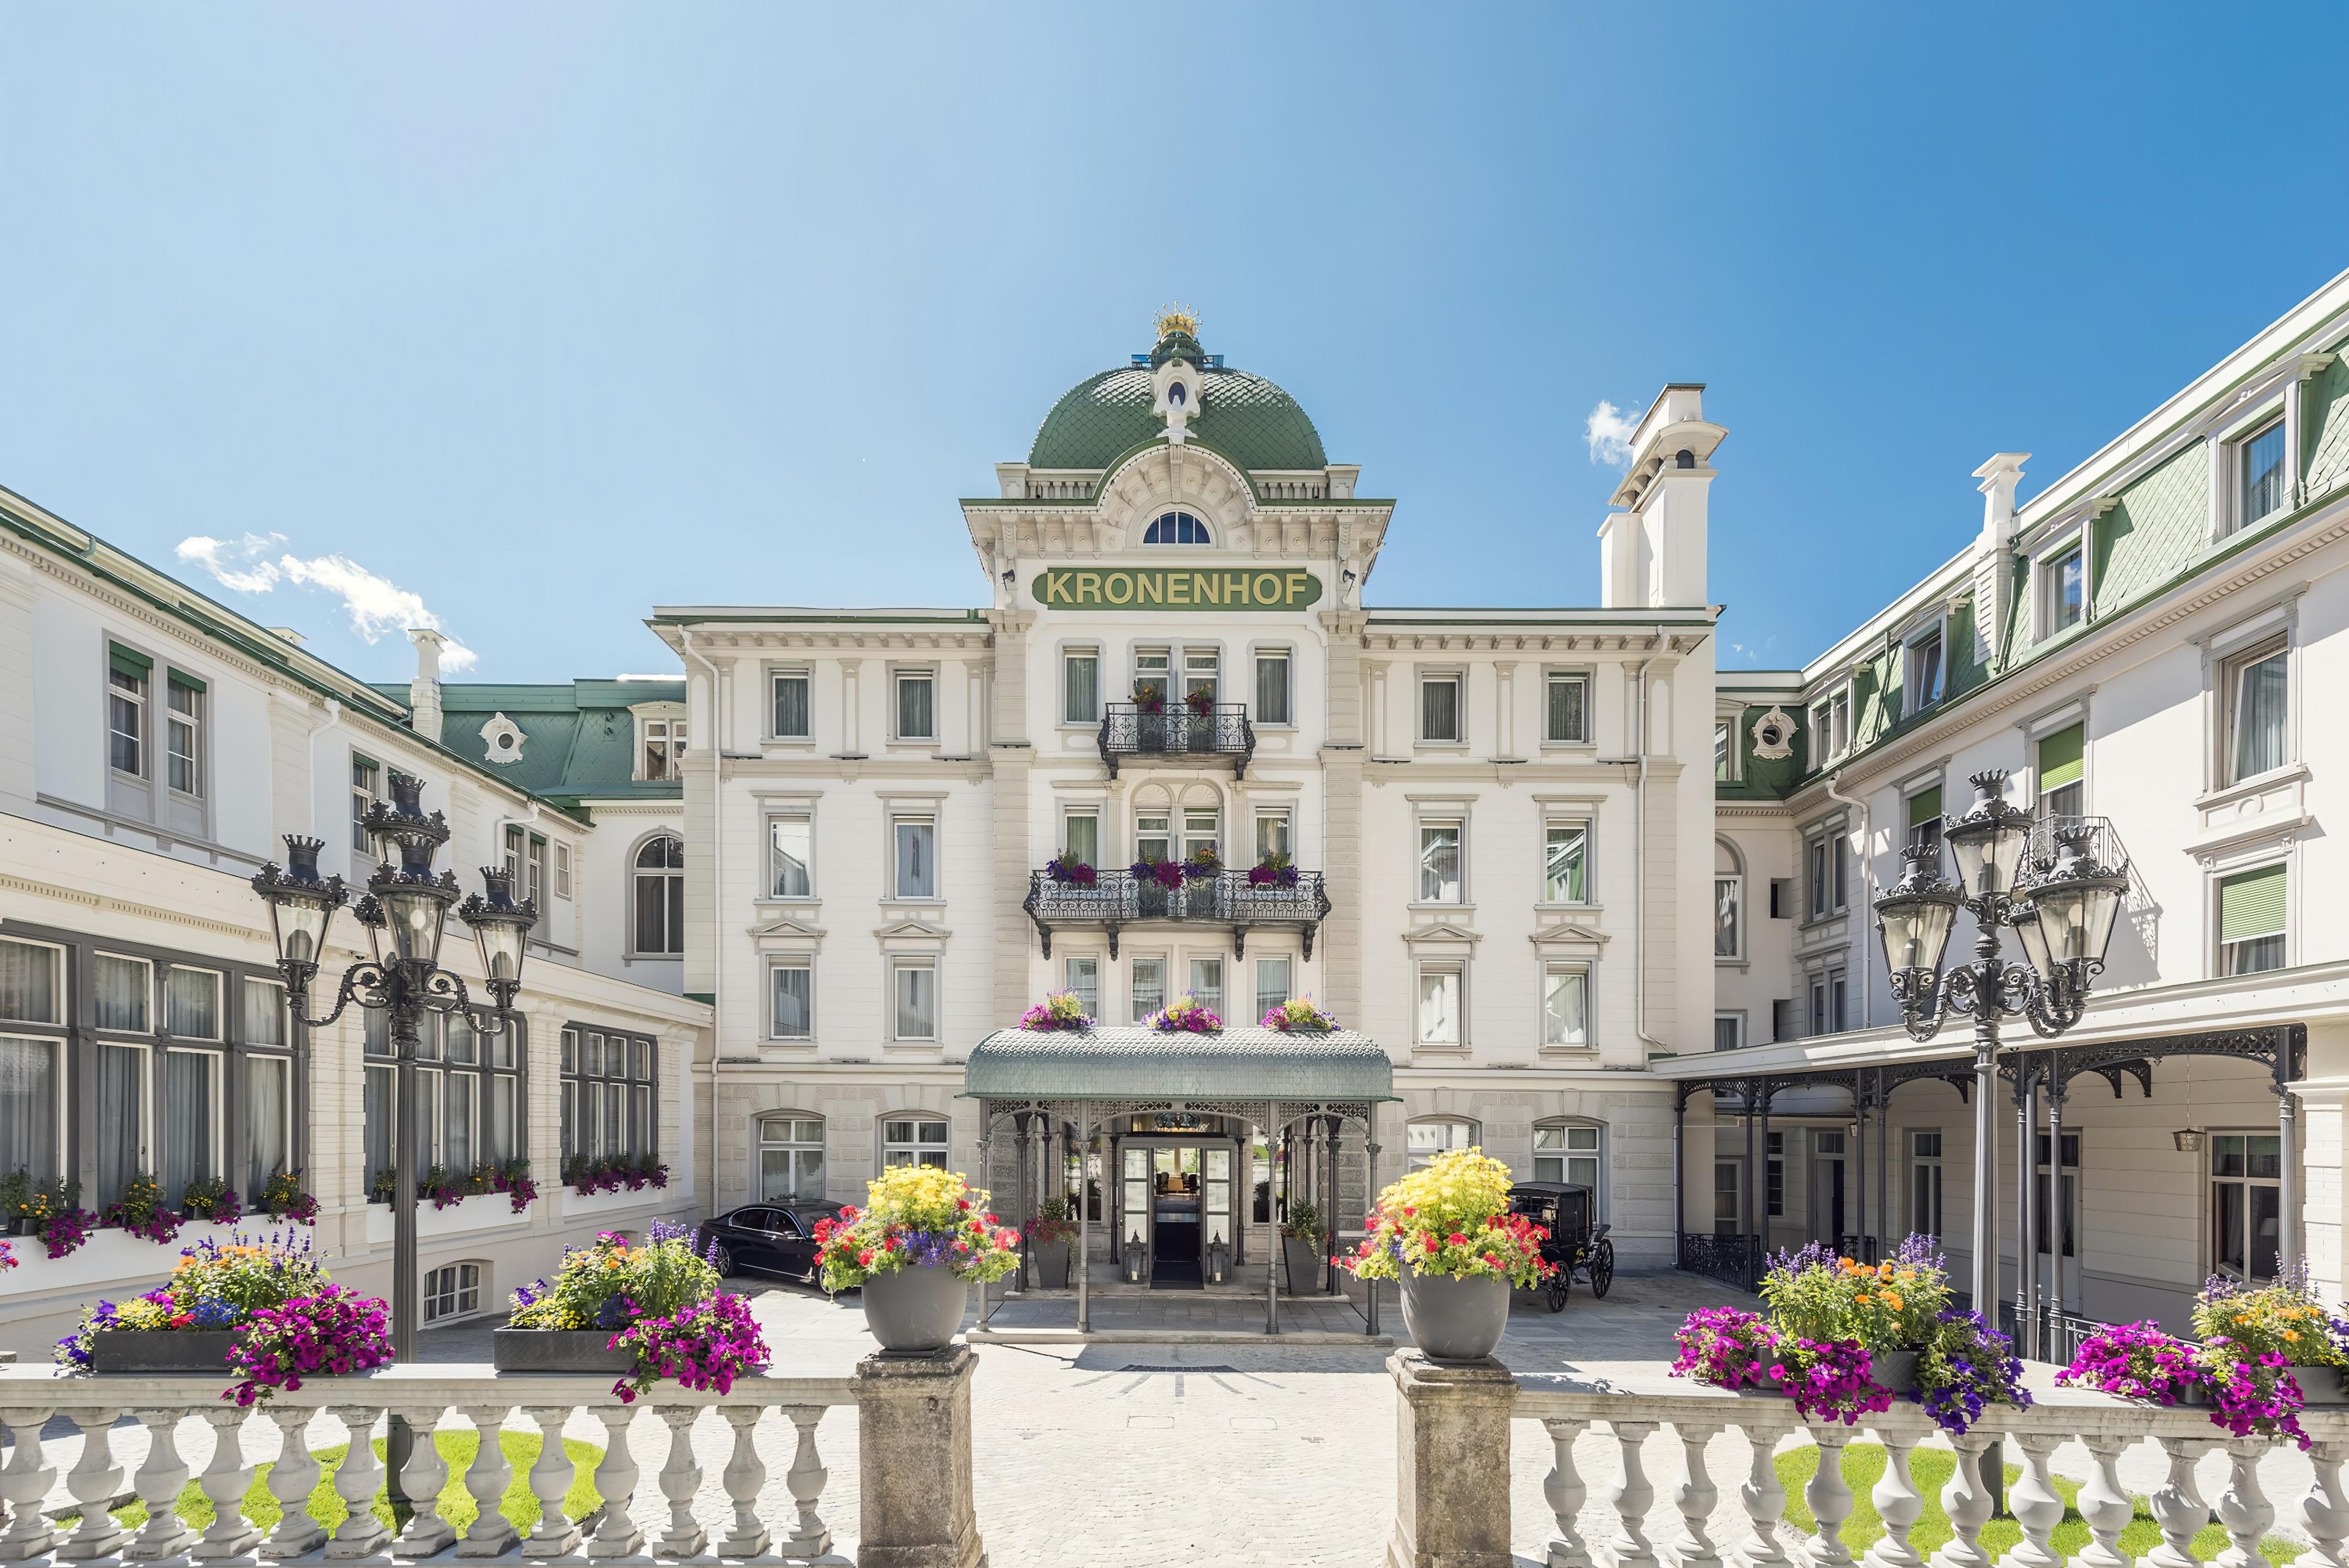 Grand Hotel Kronenhof - Pontresina, Switzerland